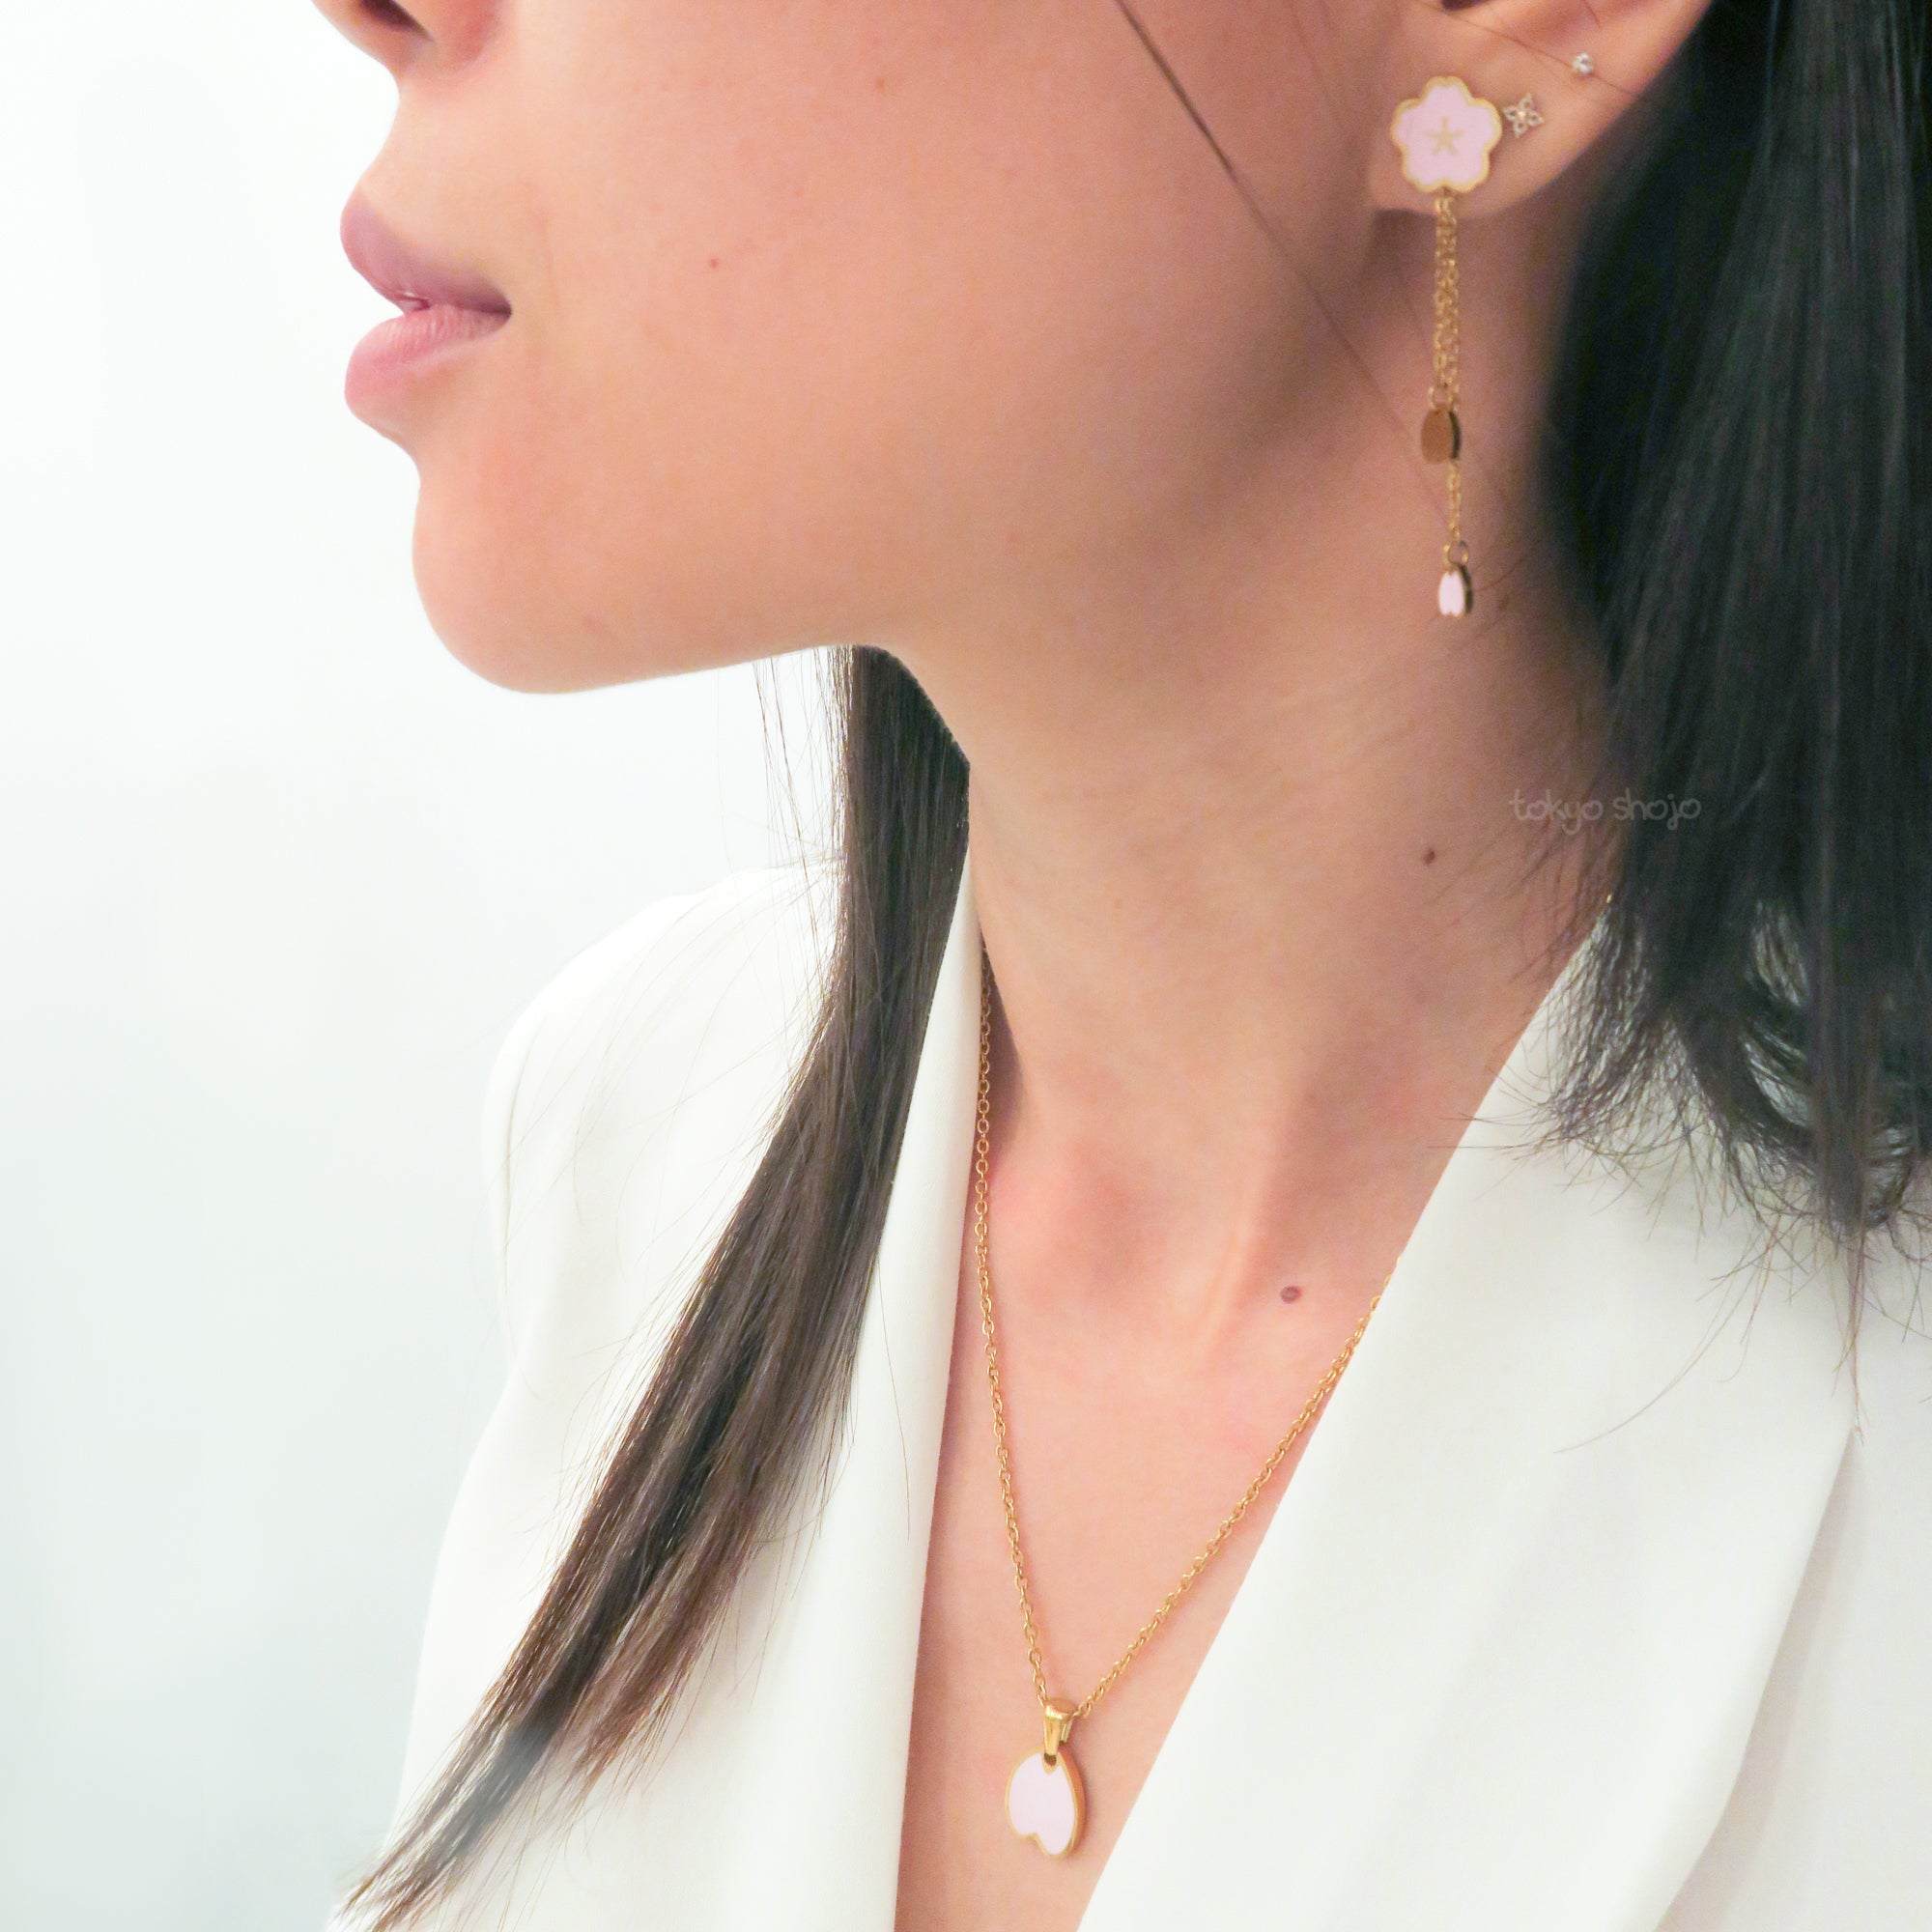 [Tokyo Shojo] Sakura Petal Earrings